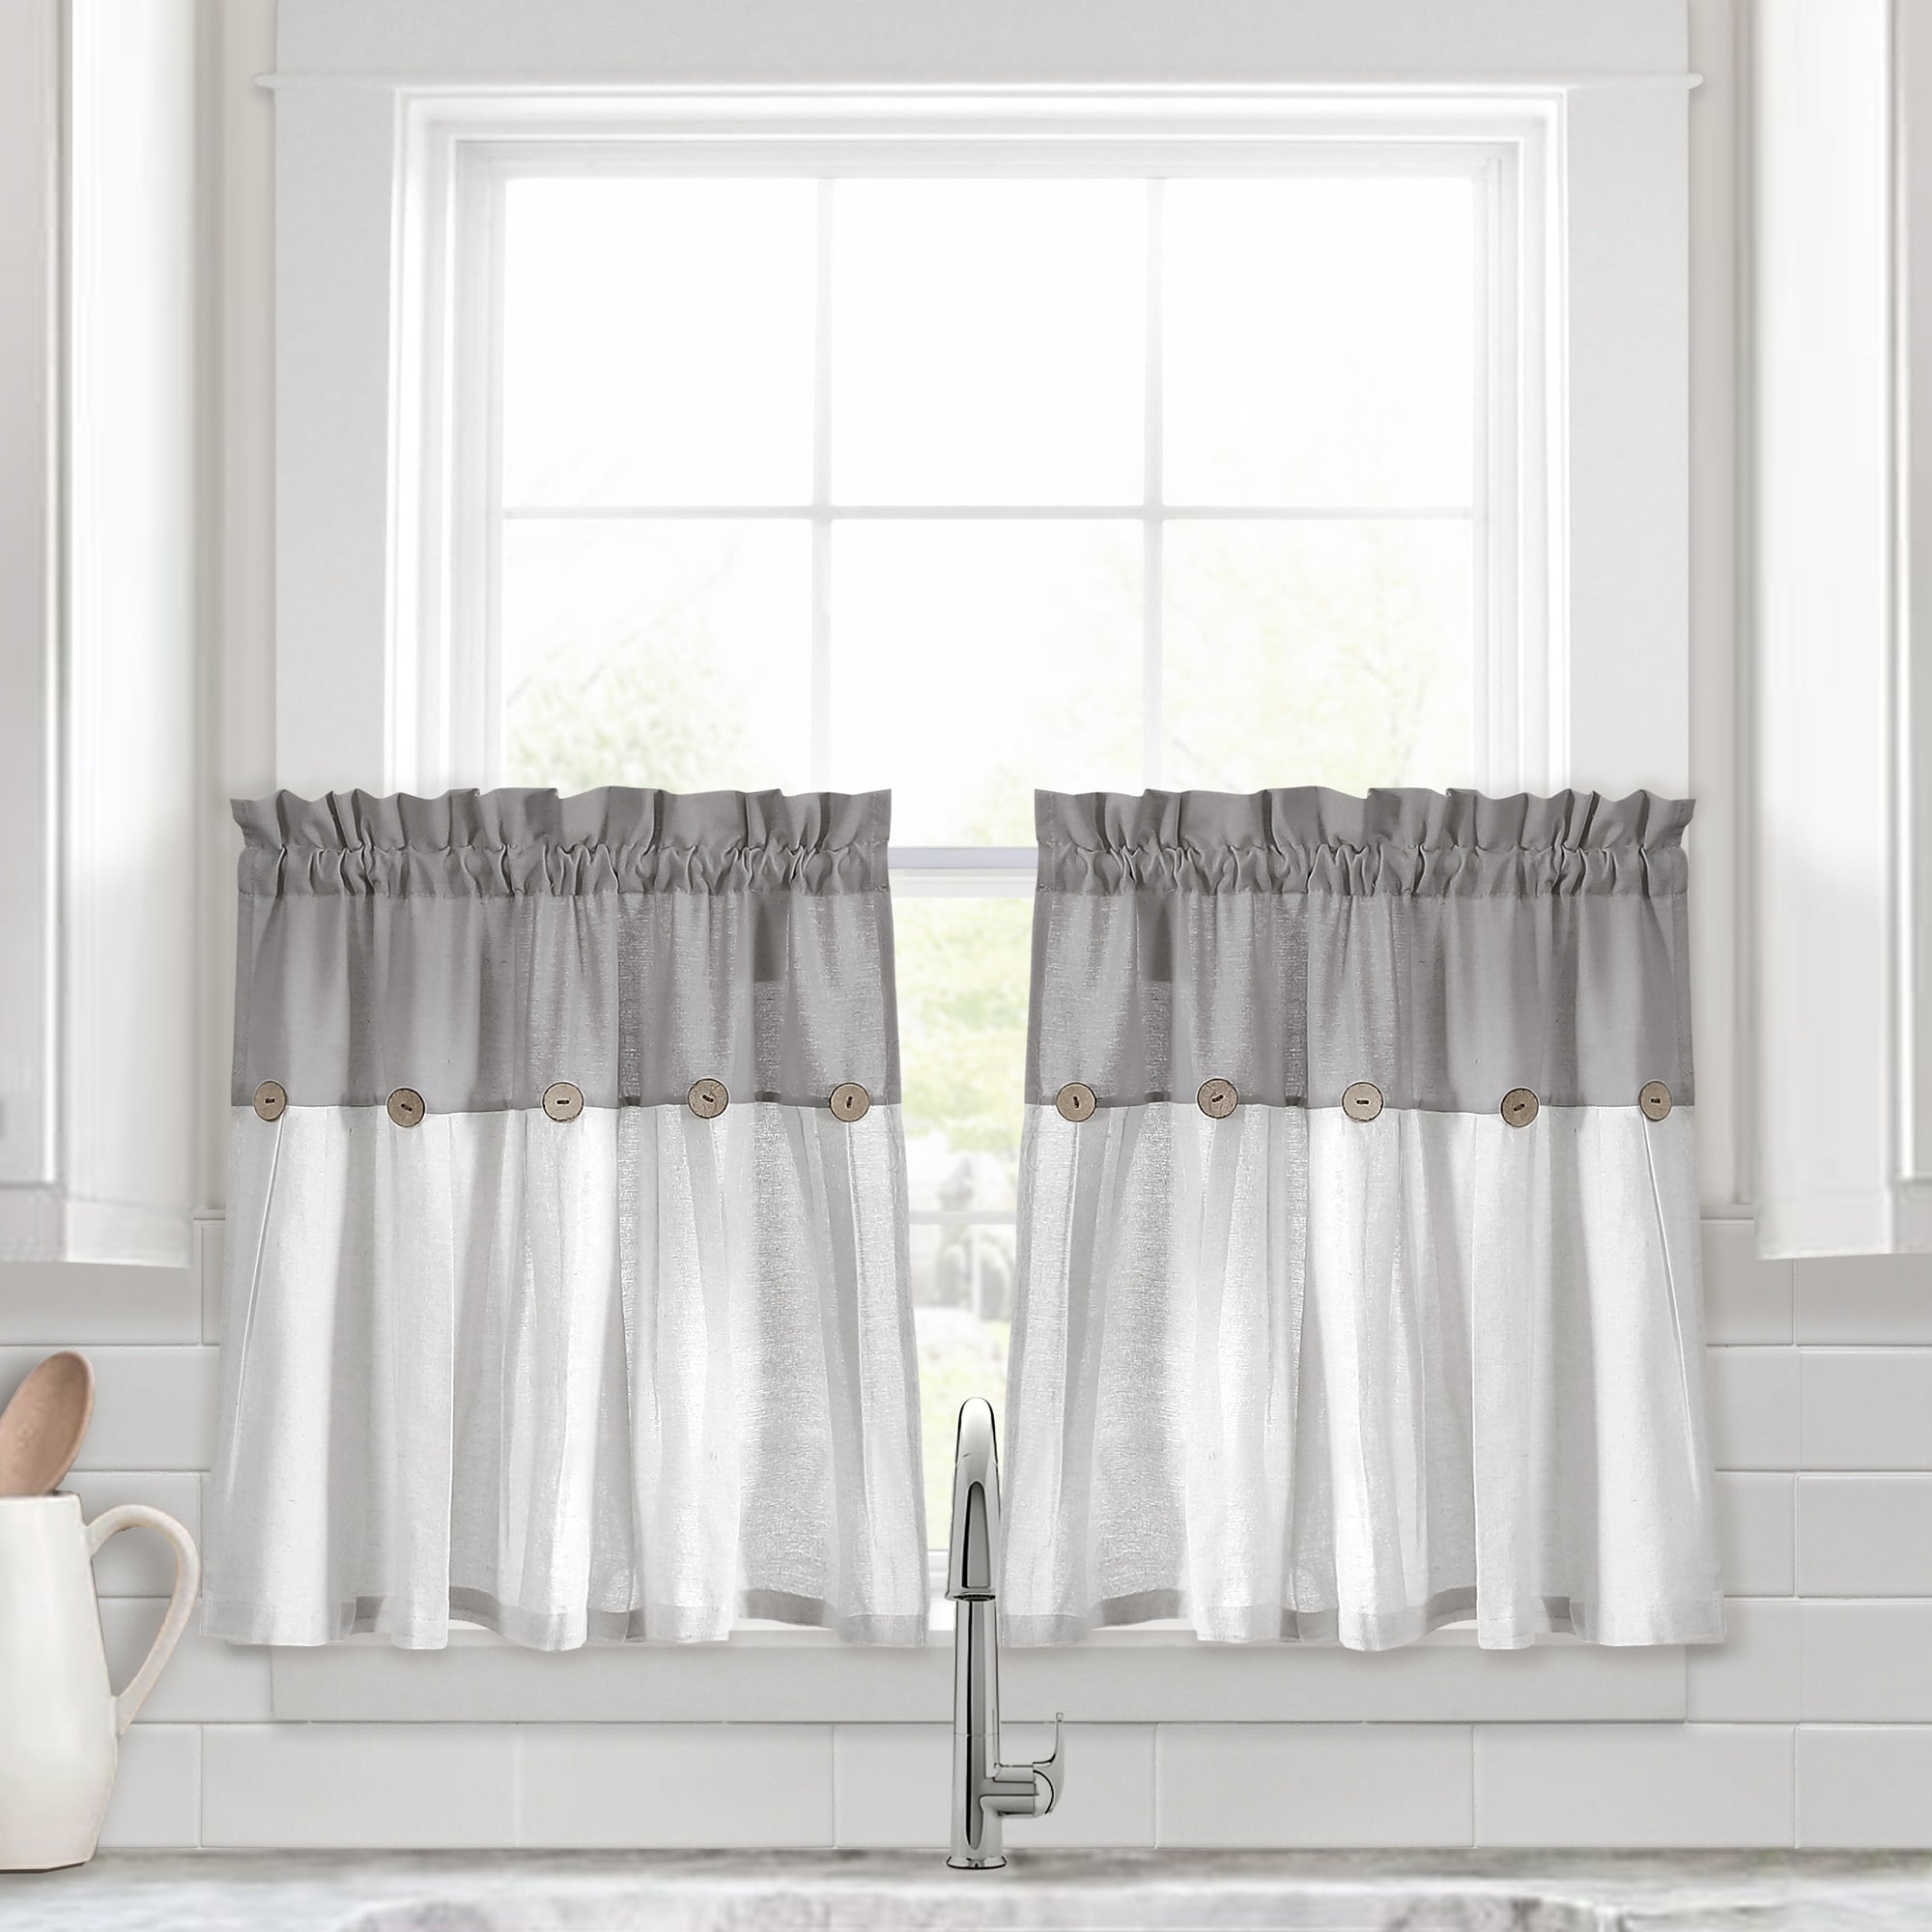 H.VERSAILTEX Kitchen Curtains for Windows Natural Linen Textured Curtain Tiers for Bathroom Small Curtains/Drapes for Kitchen Window 2 Panels, Each 29 W x 24 L, Angora